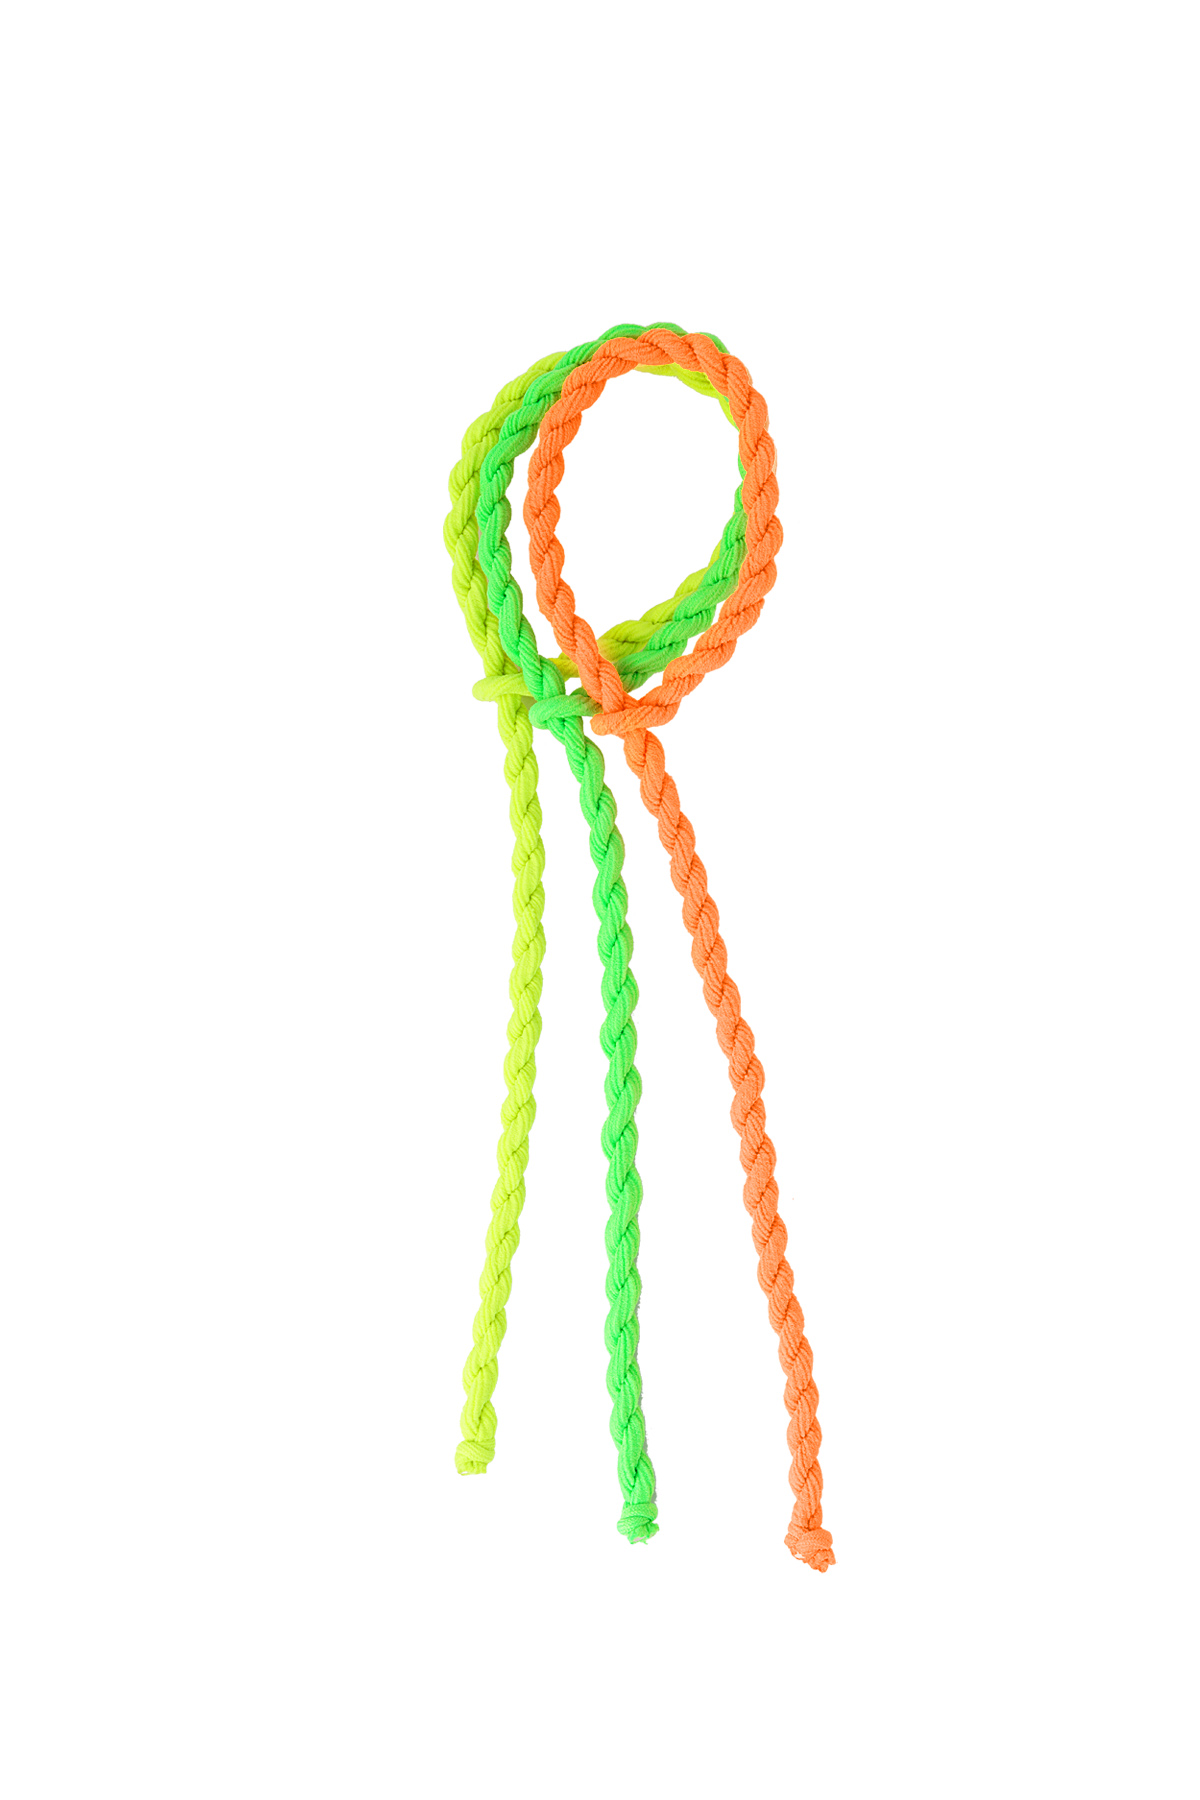 Twisted hair elastic - green & orange h5 